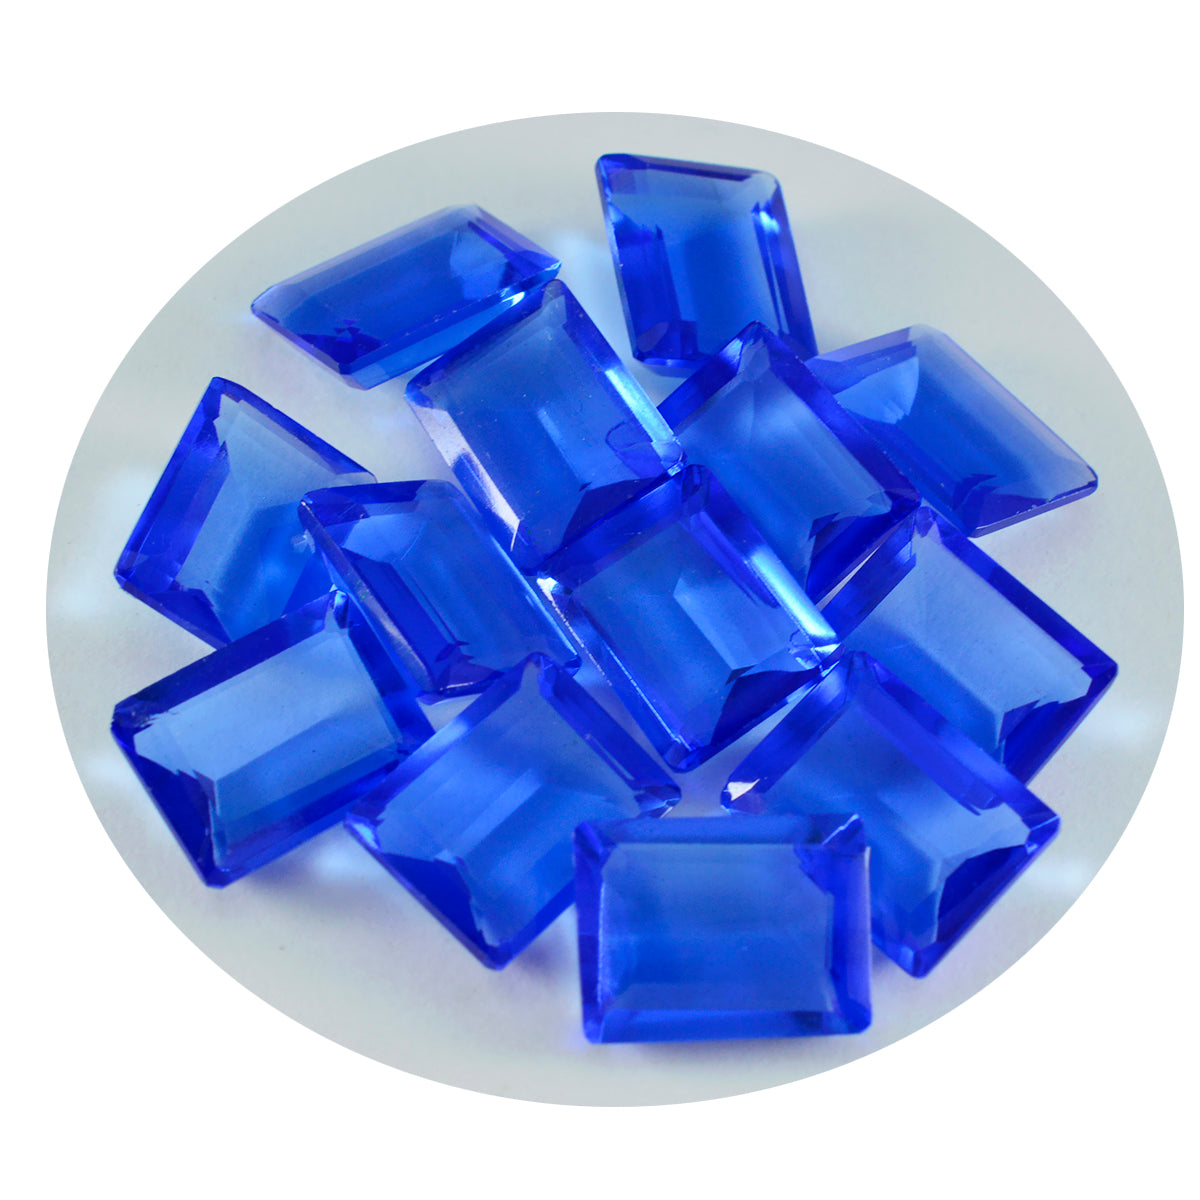 riyogems 1 st blå safir cz fasetterad 10x12 mm oktagonform härlig kvalitetspärla